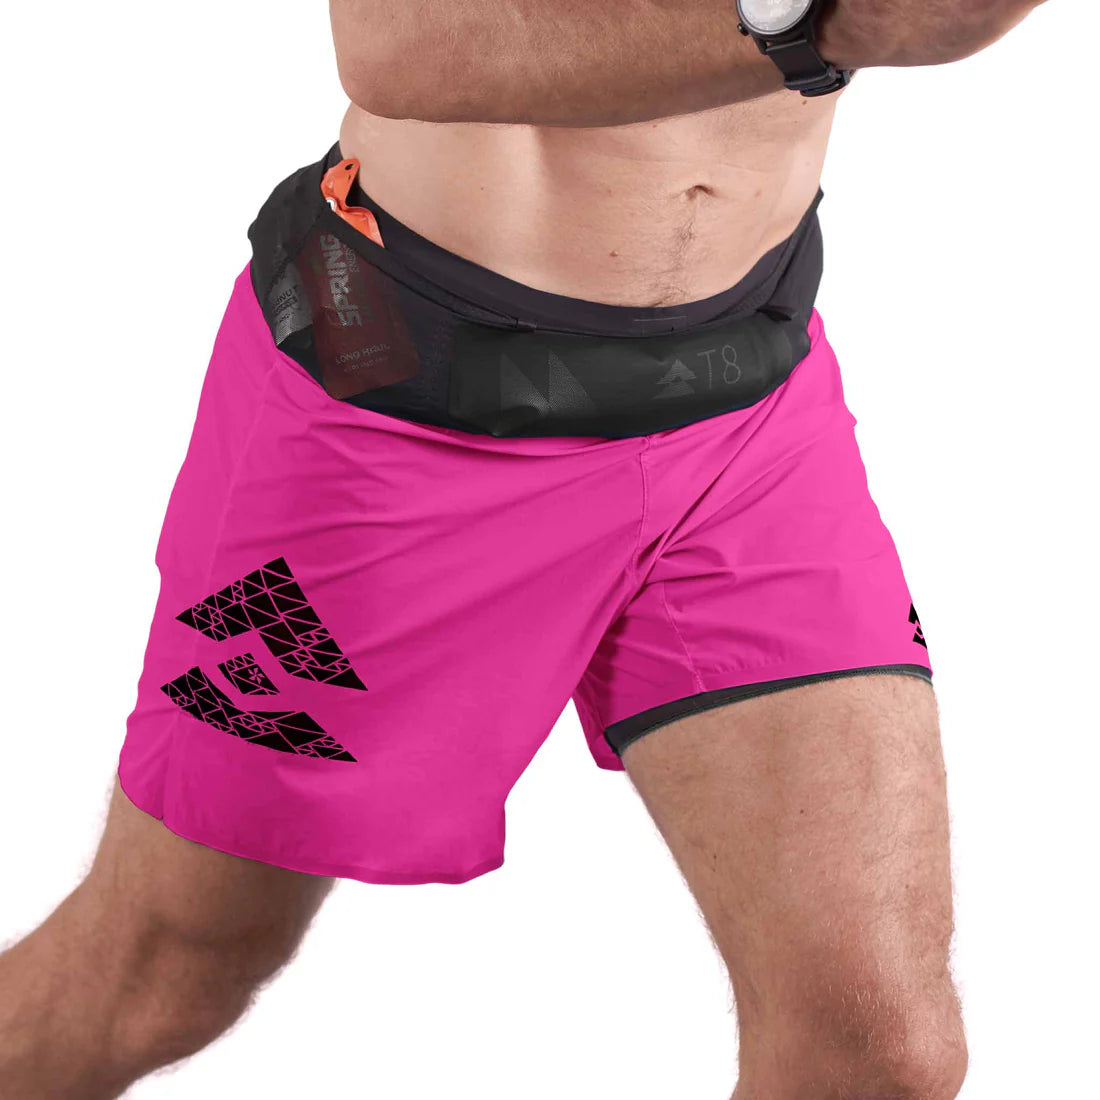 T8 Sherpa Shorts - Men's - Hot Pink